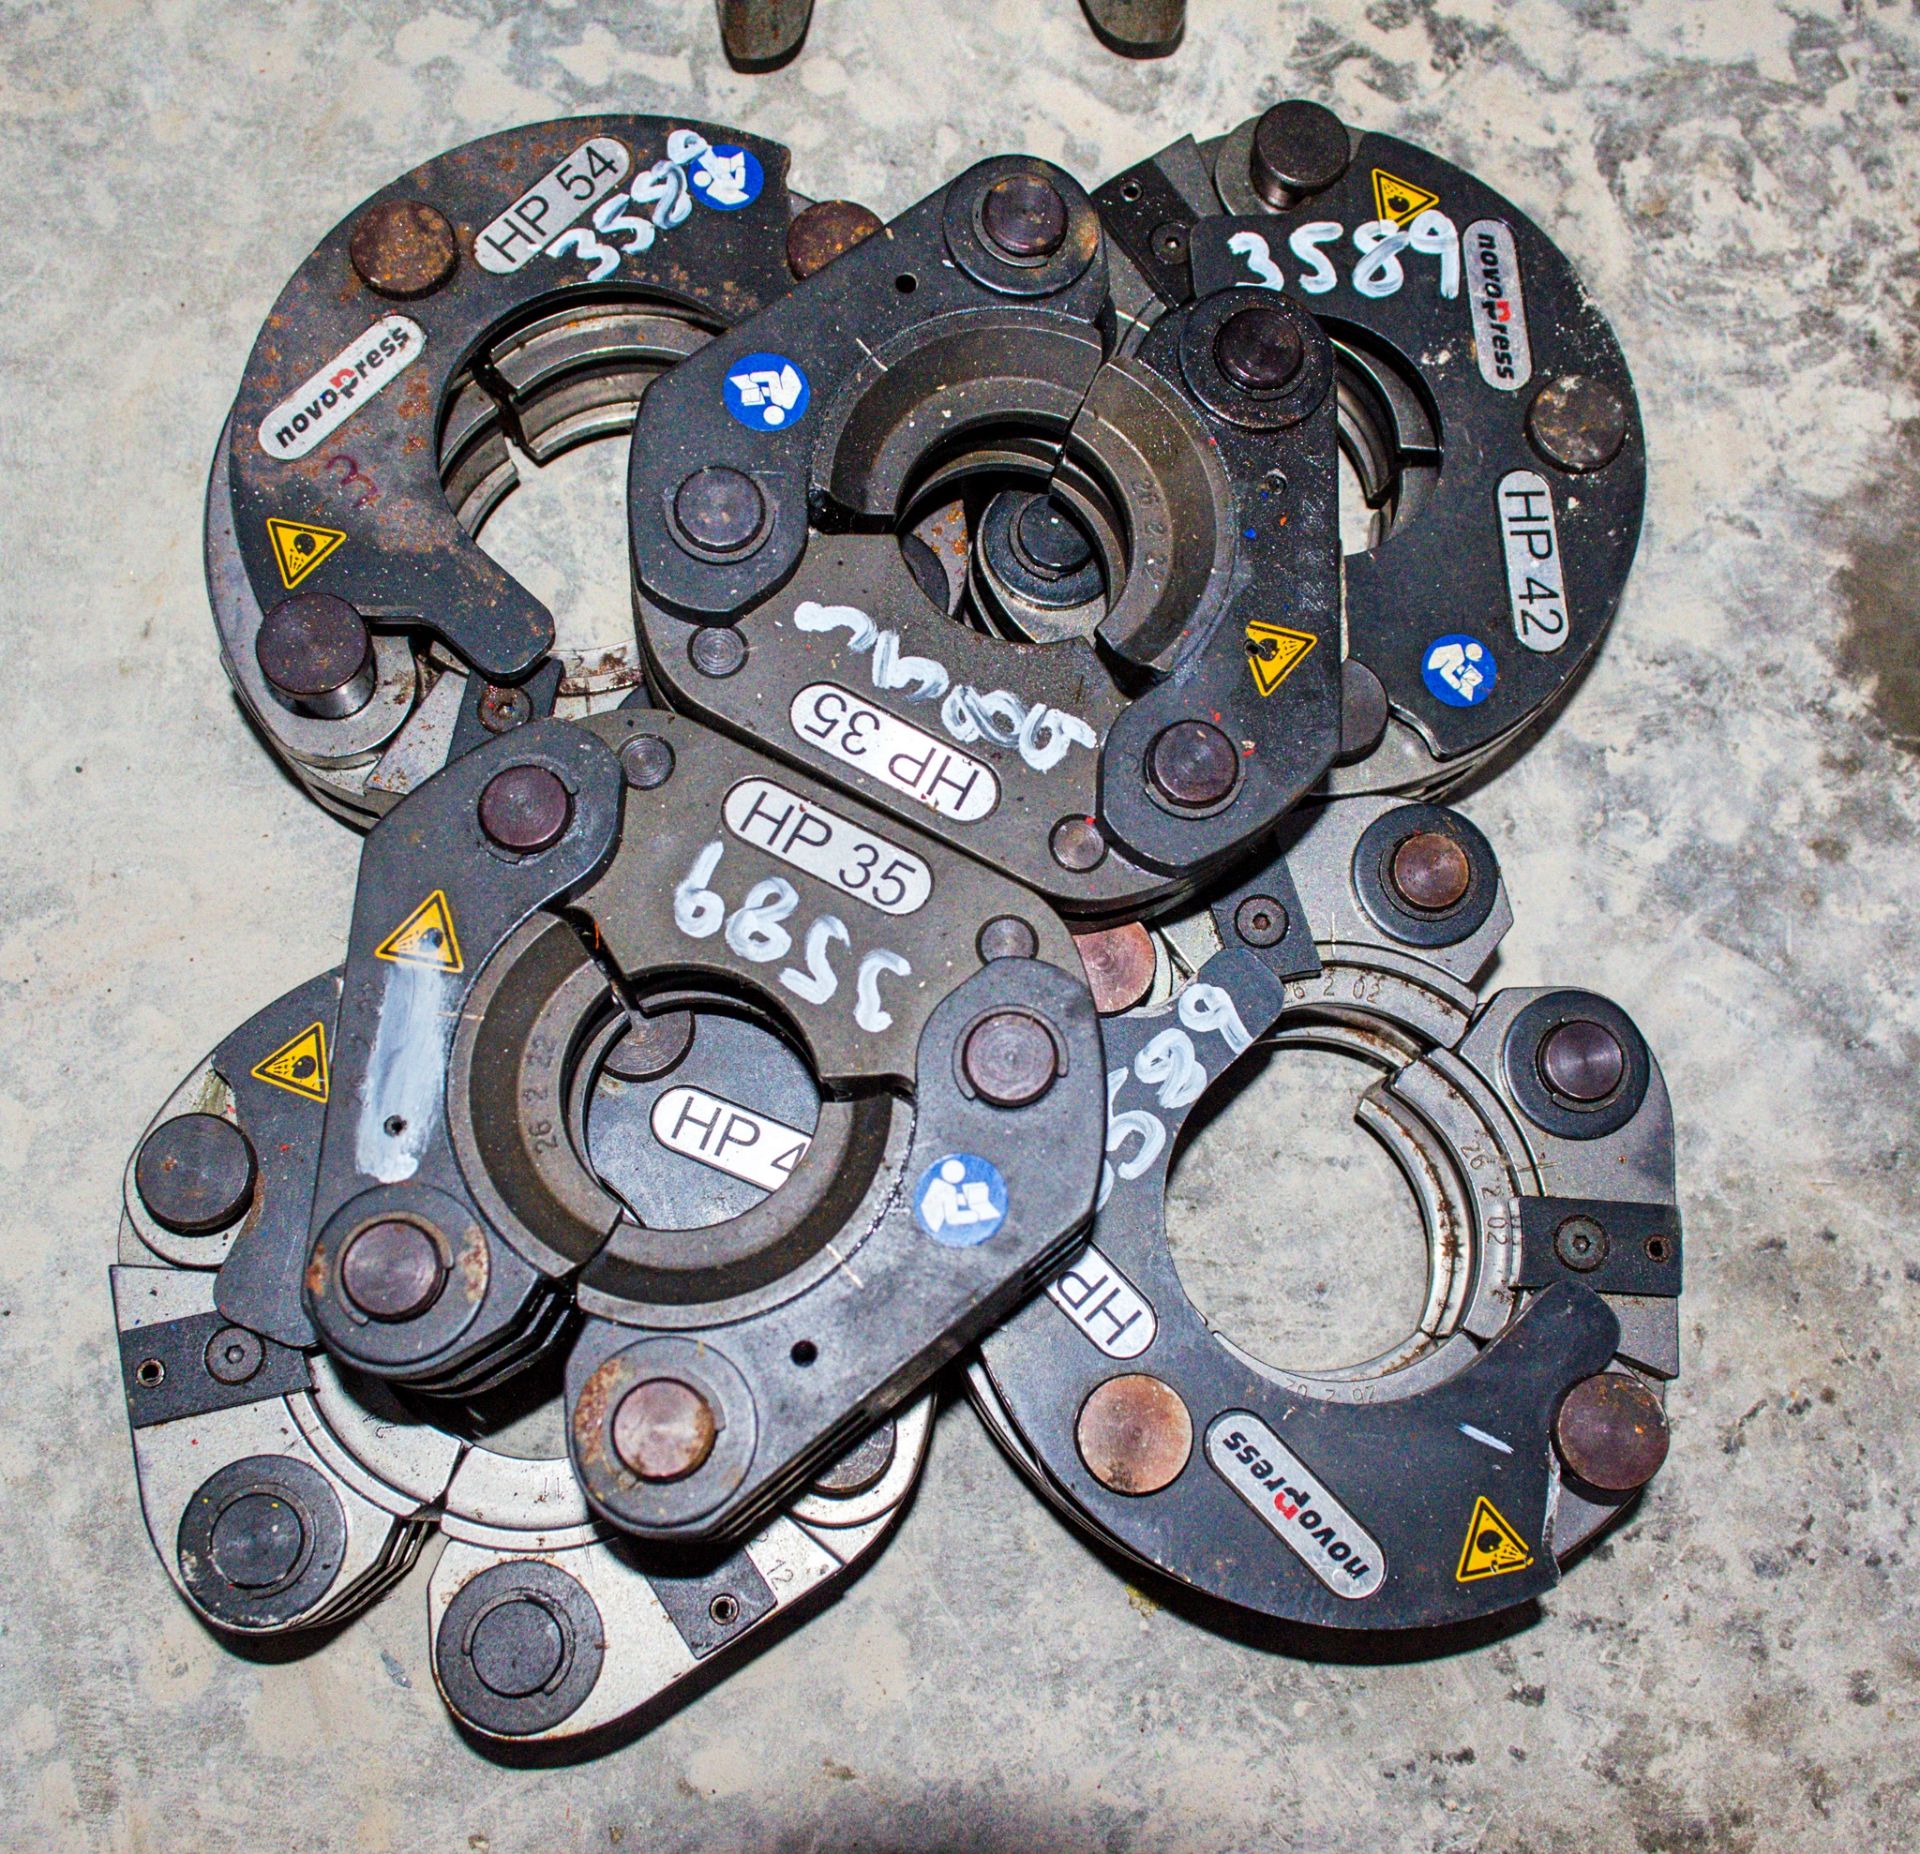 6 - Geberit pipe press clamps